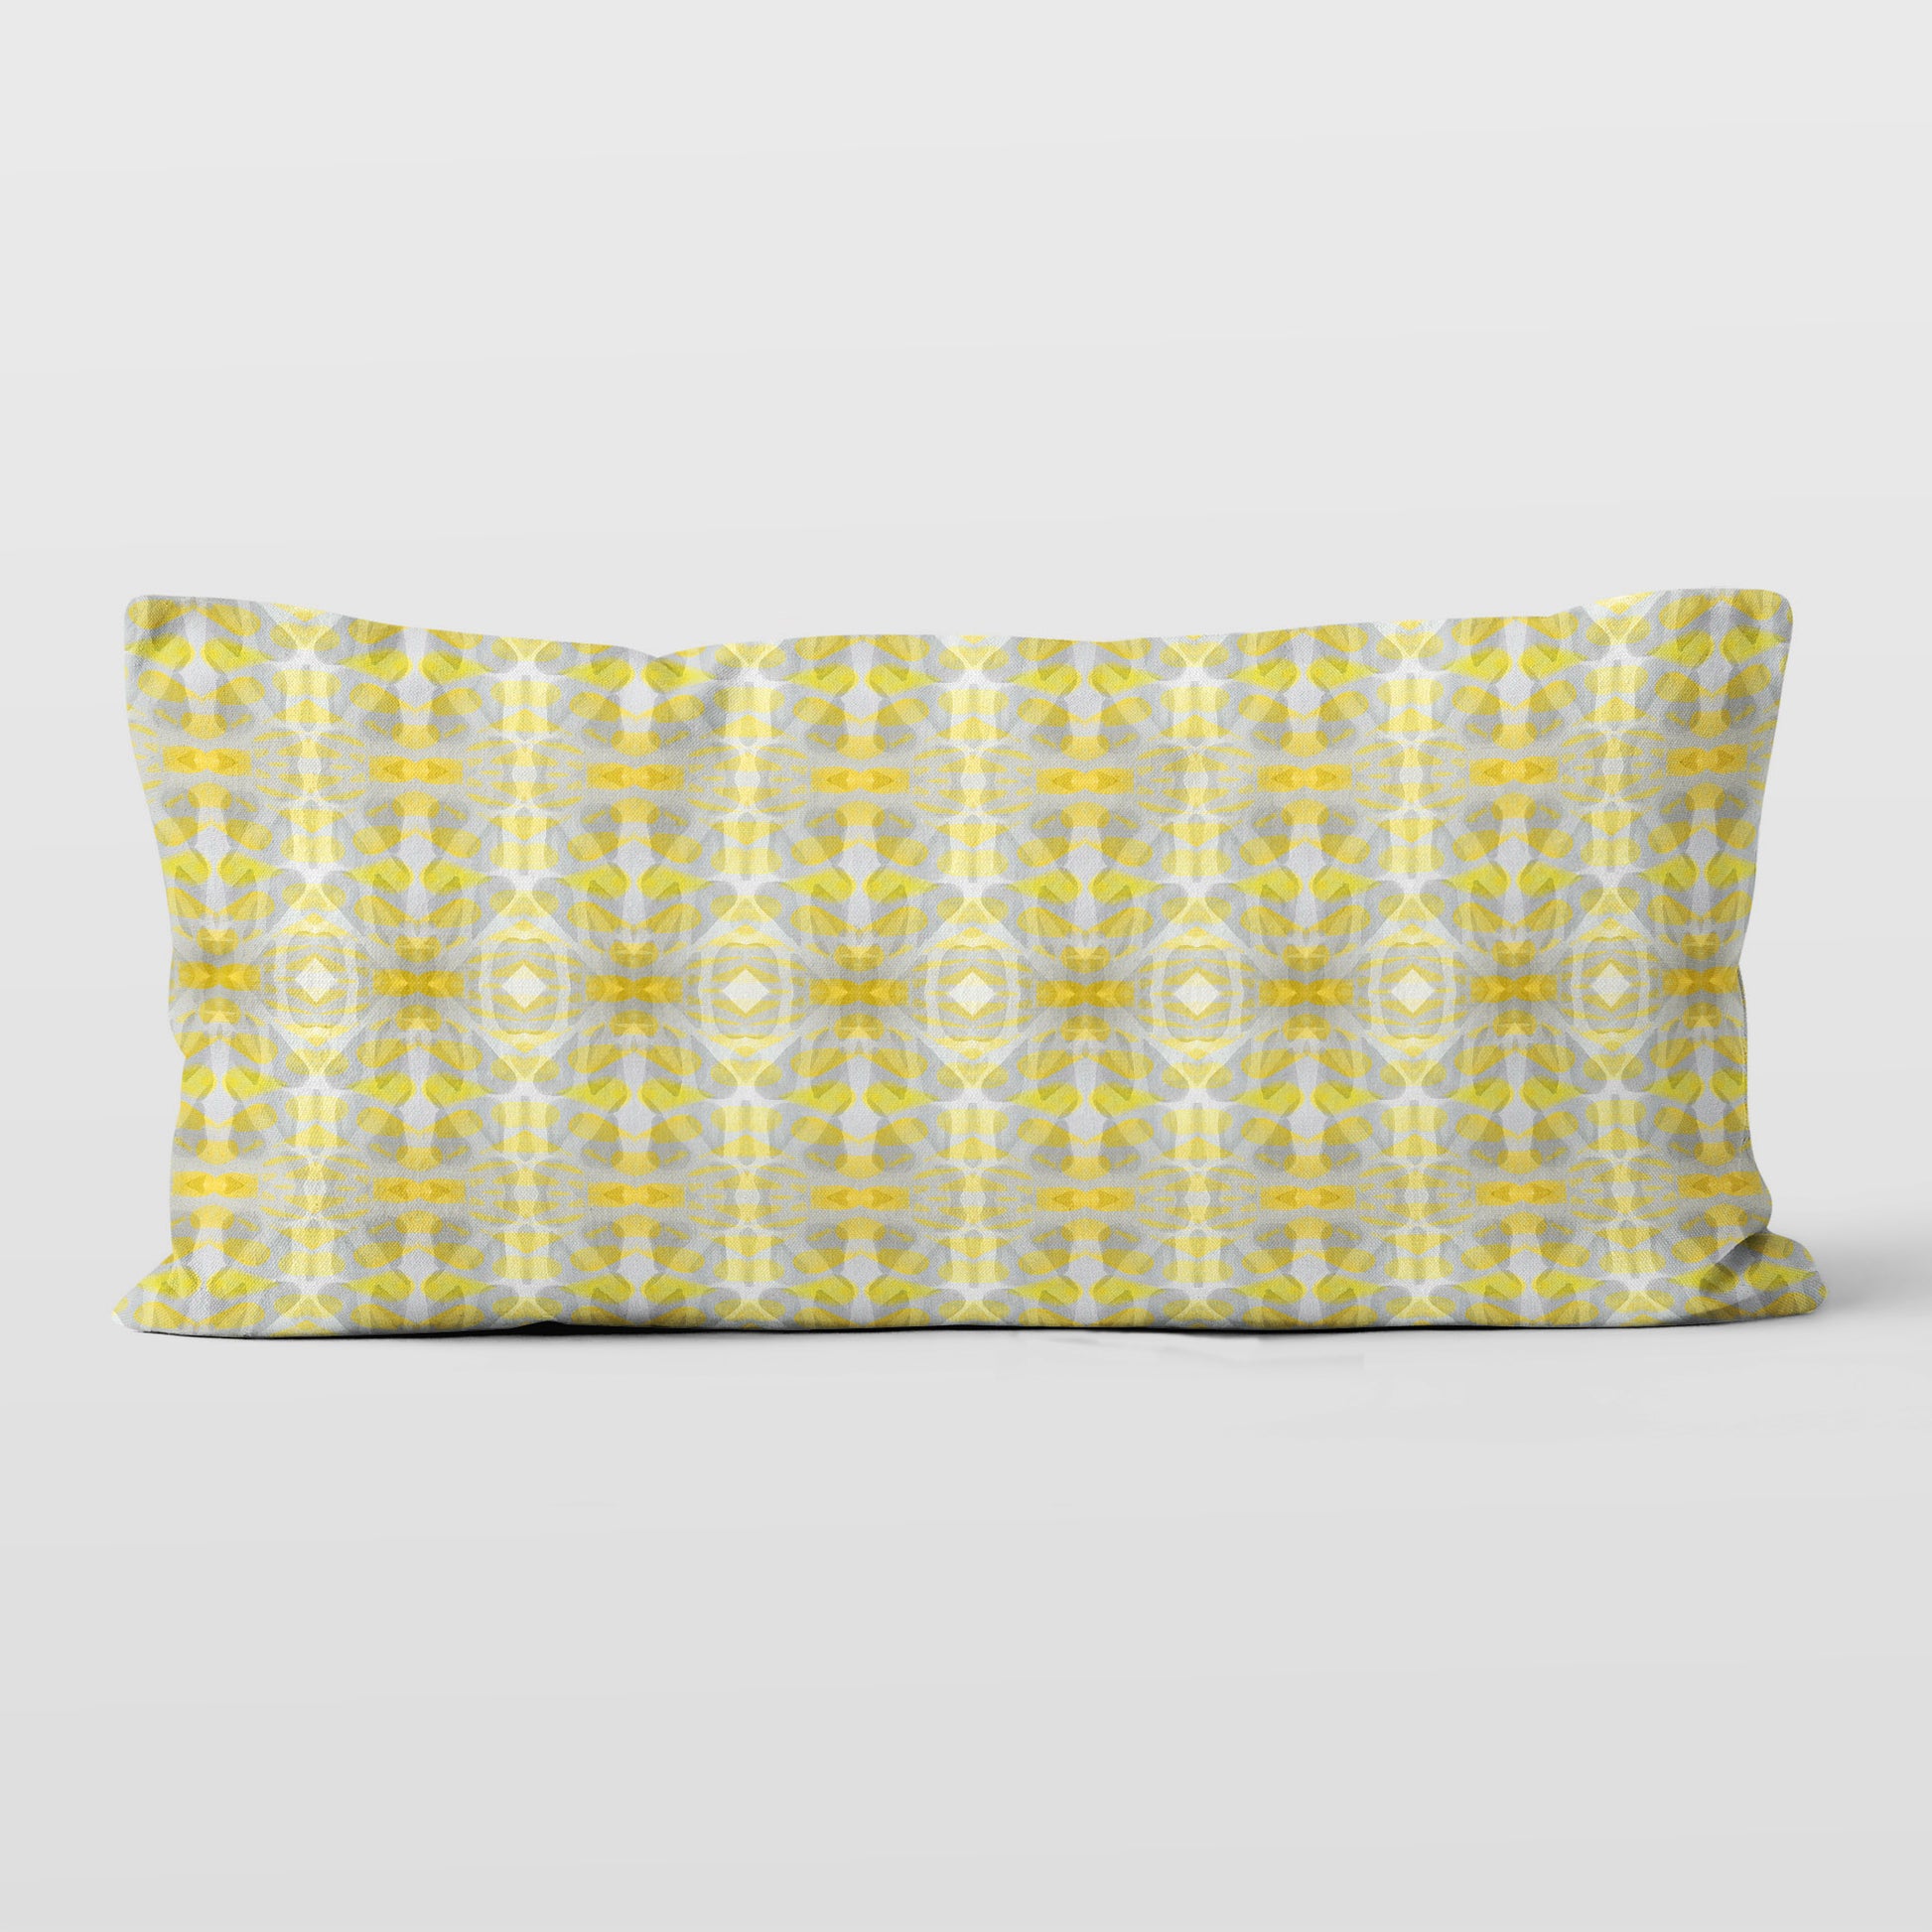 Rectangular lumbar pillow featuring handprinted striped yellow and grey pattern.